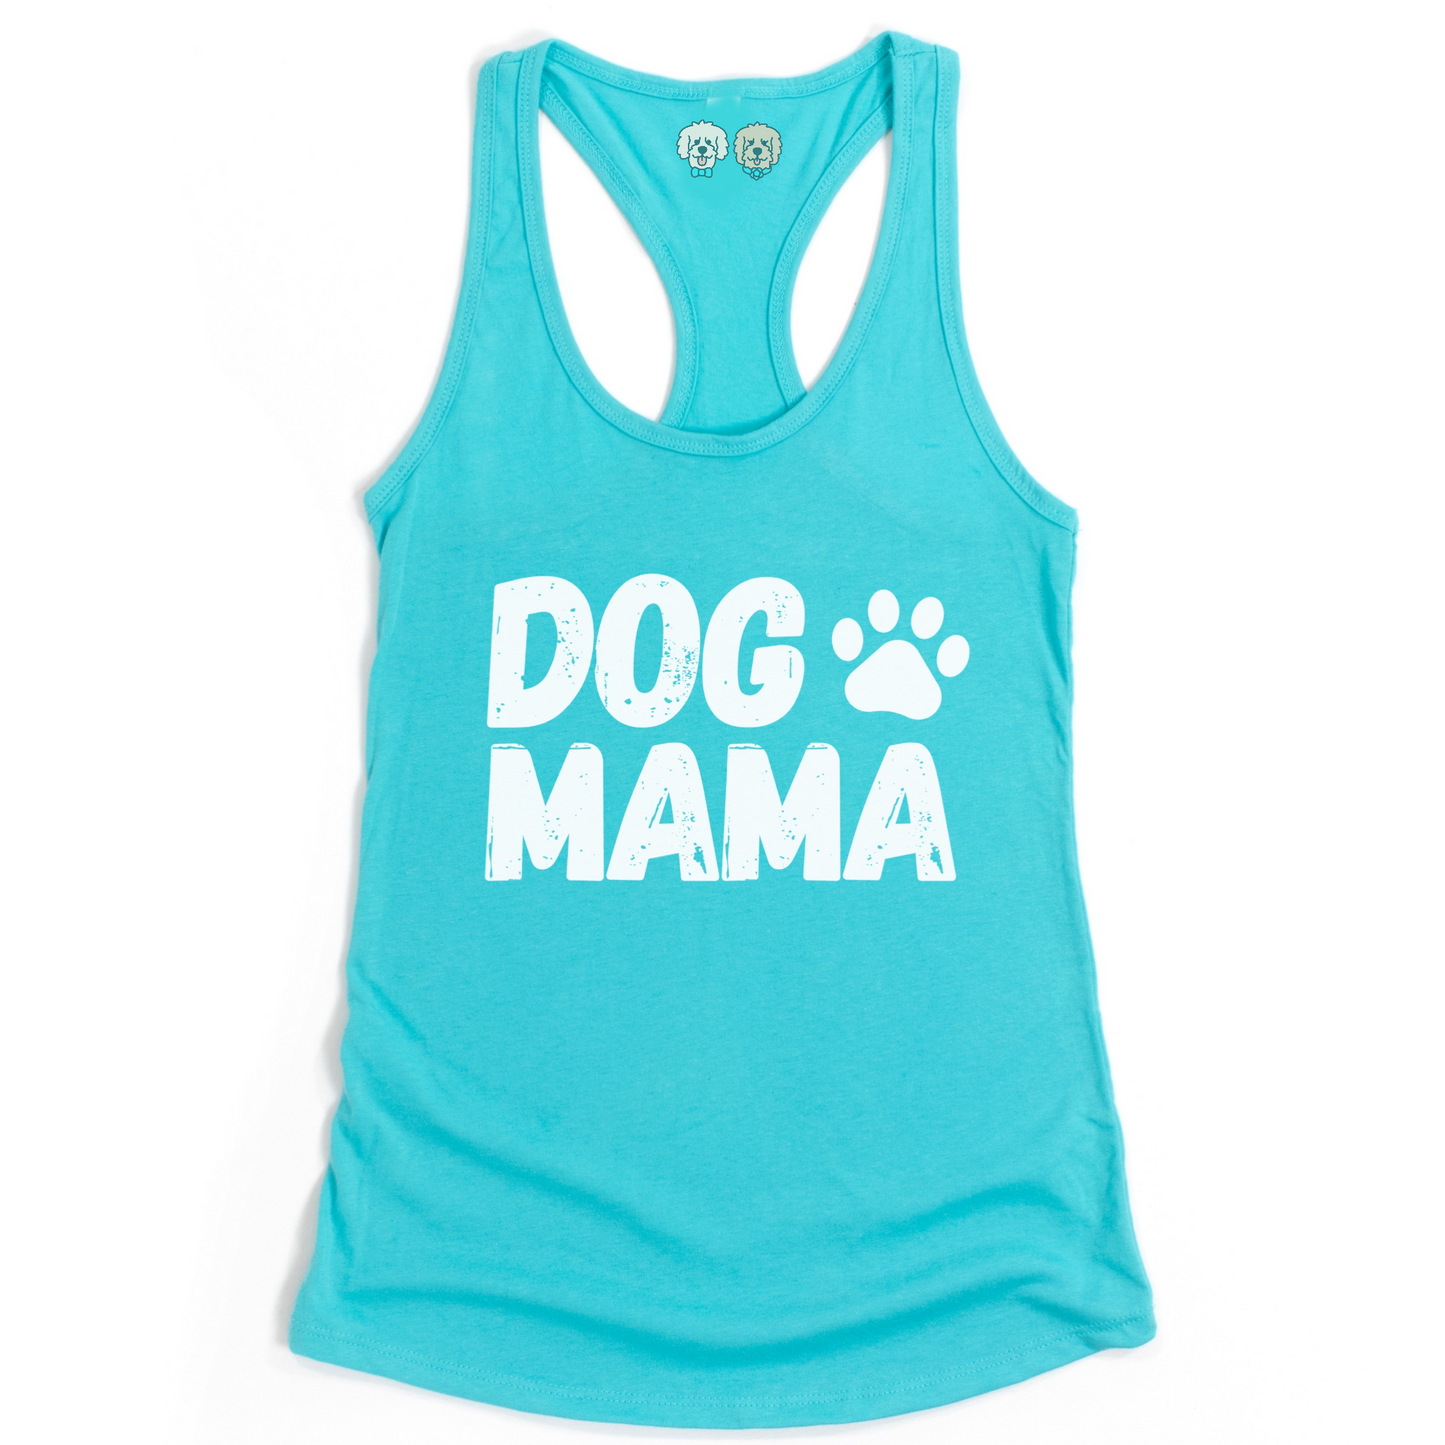 DOG MAMA - TROPICAL BLUE TANK